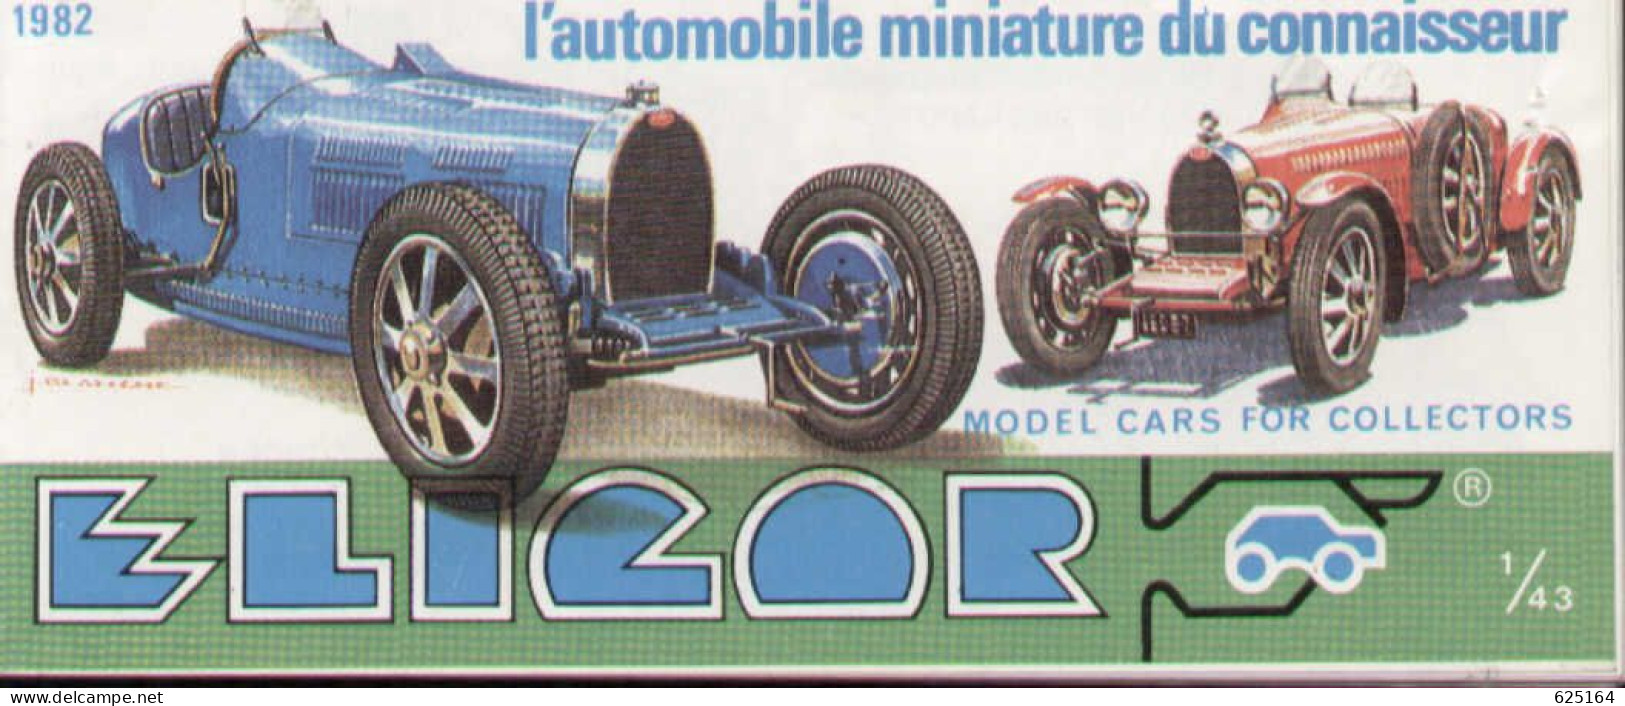 Catalogue ELIGOR 1982 L'automobile Miniature Du Connaisseur 1/43 - Eligor